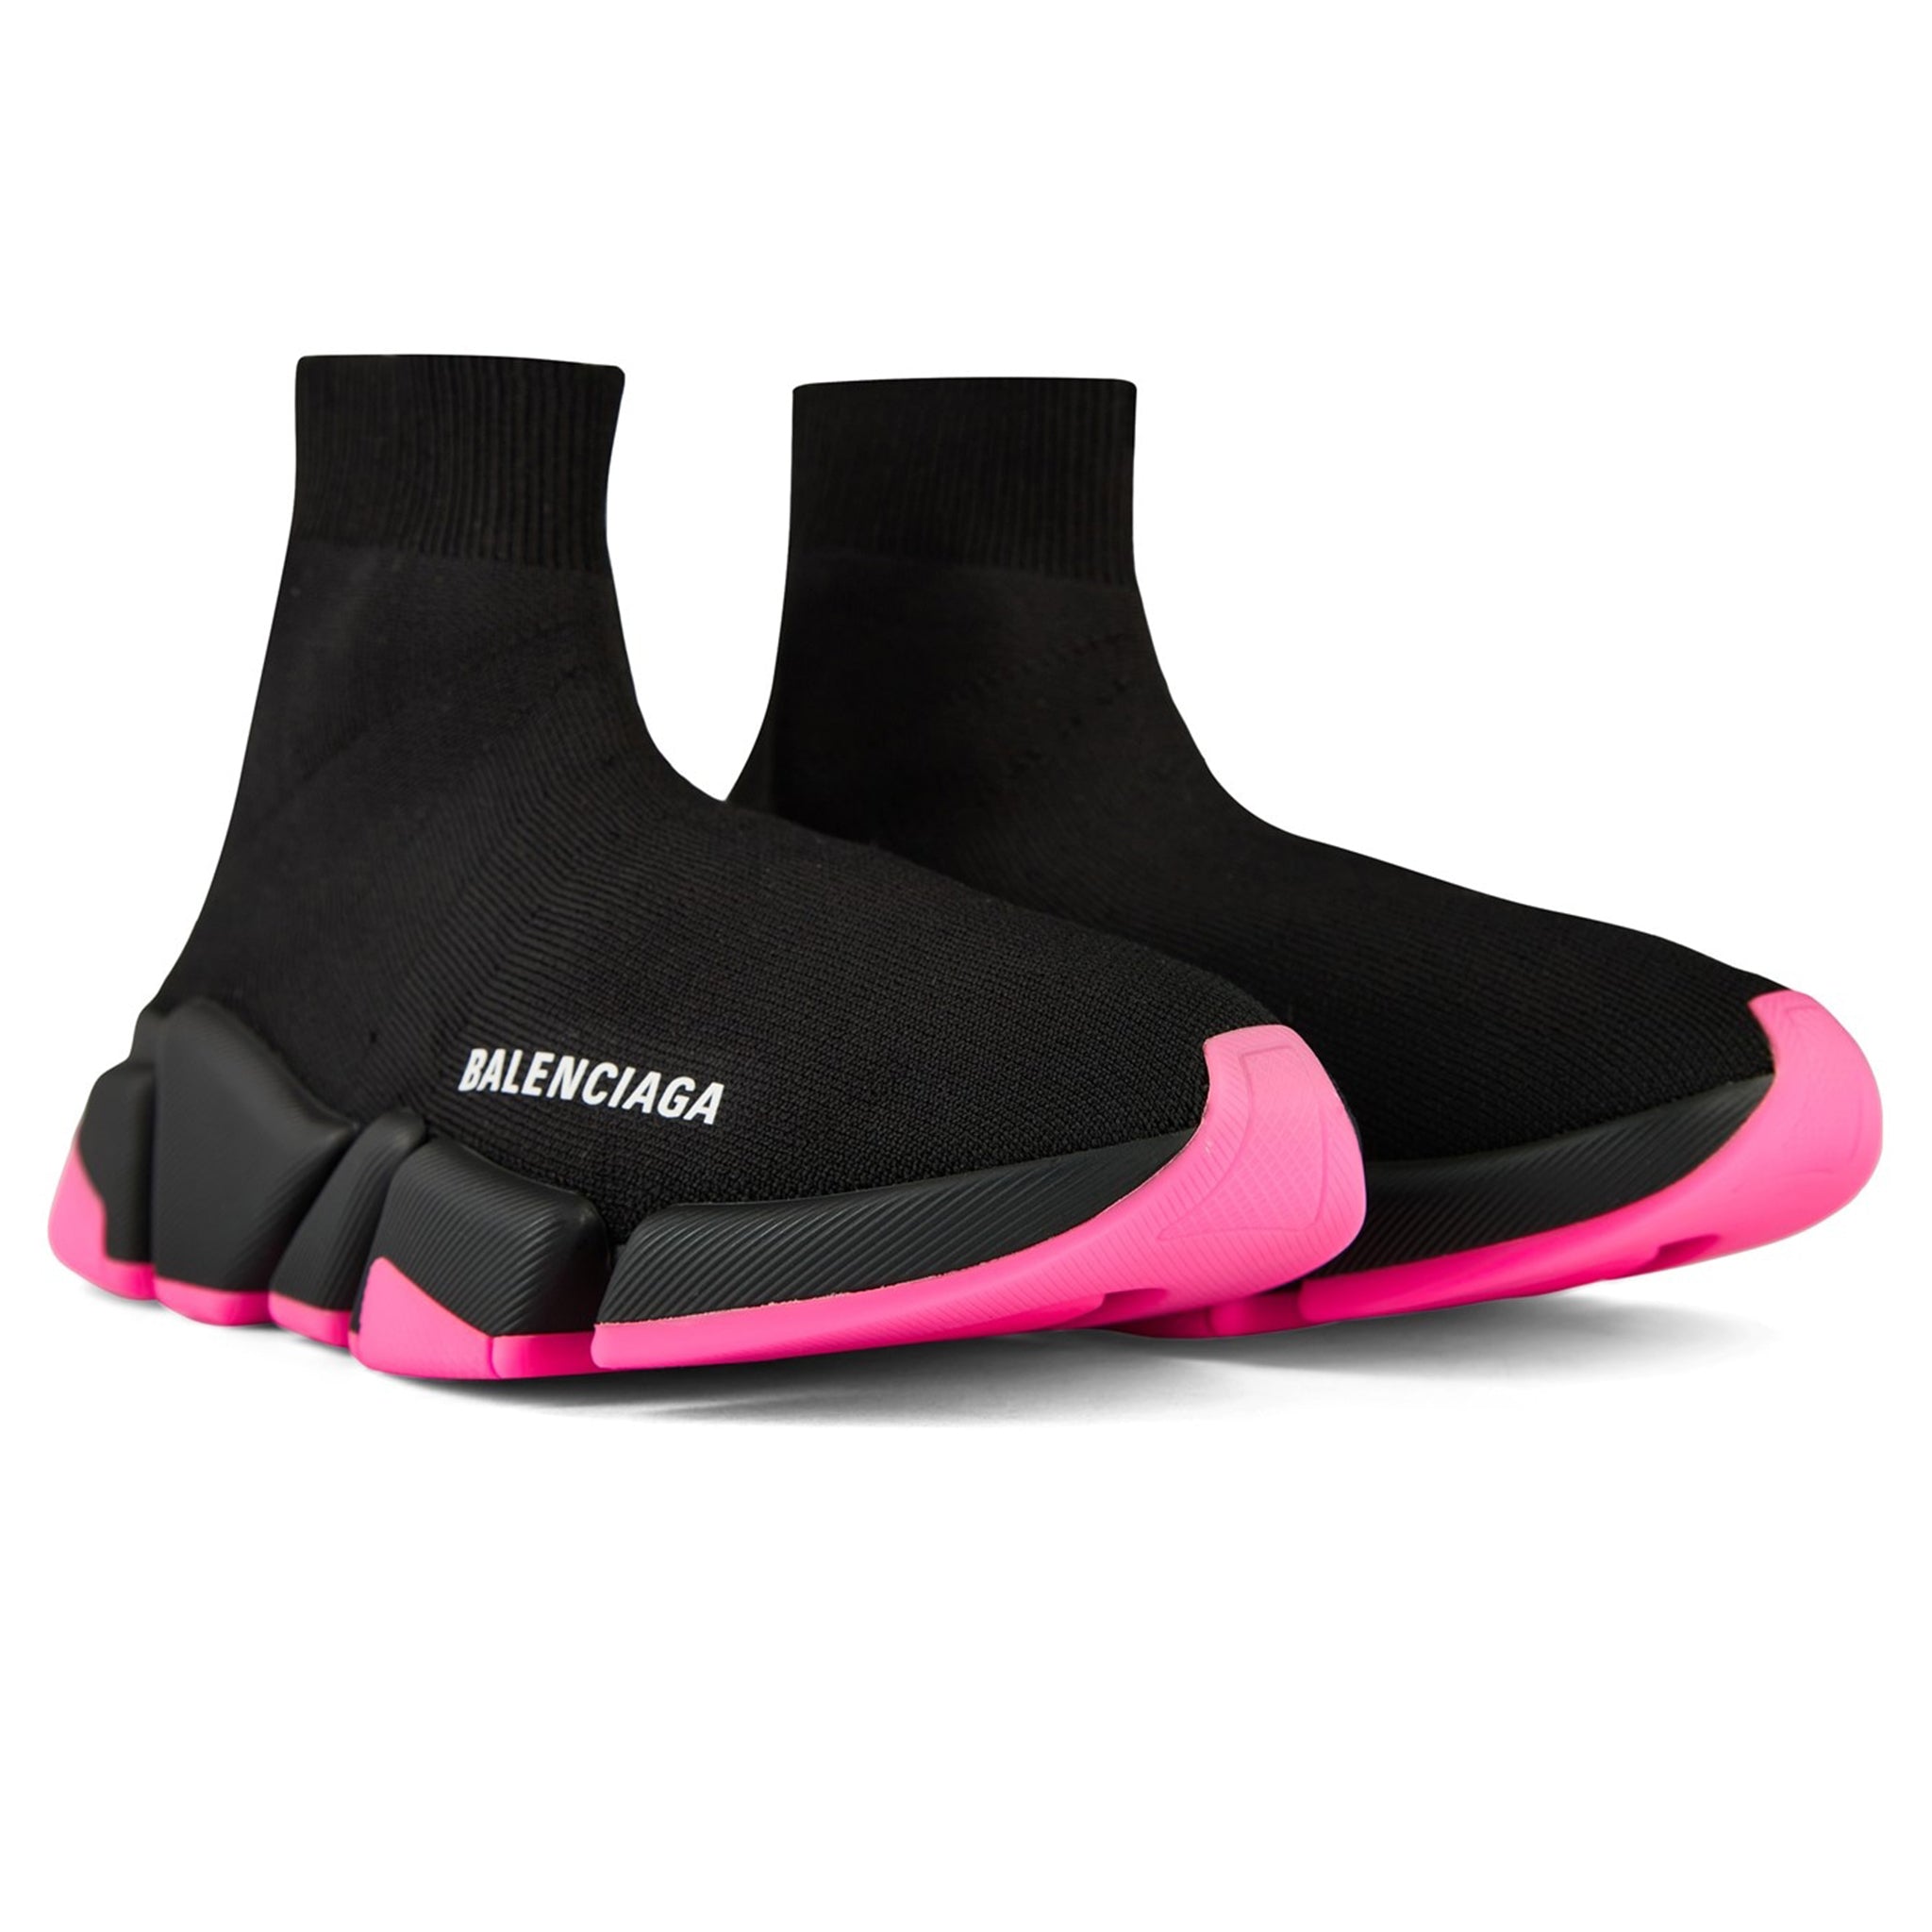 BALENCIAGA 425 Kid039s Speed LT Sock Sneakers Pink EU 2728  1011  Toddler NEW  eBay